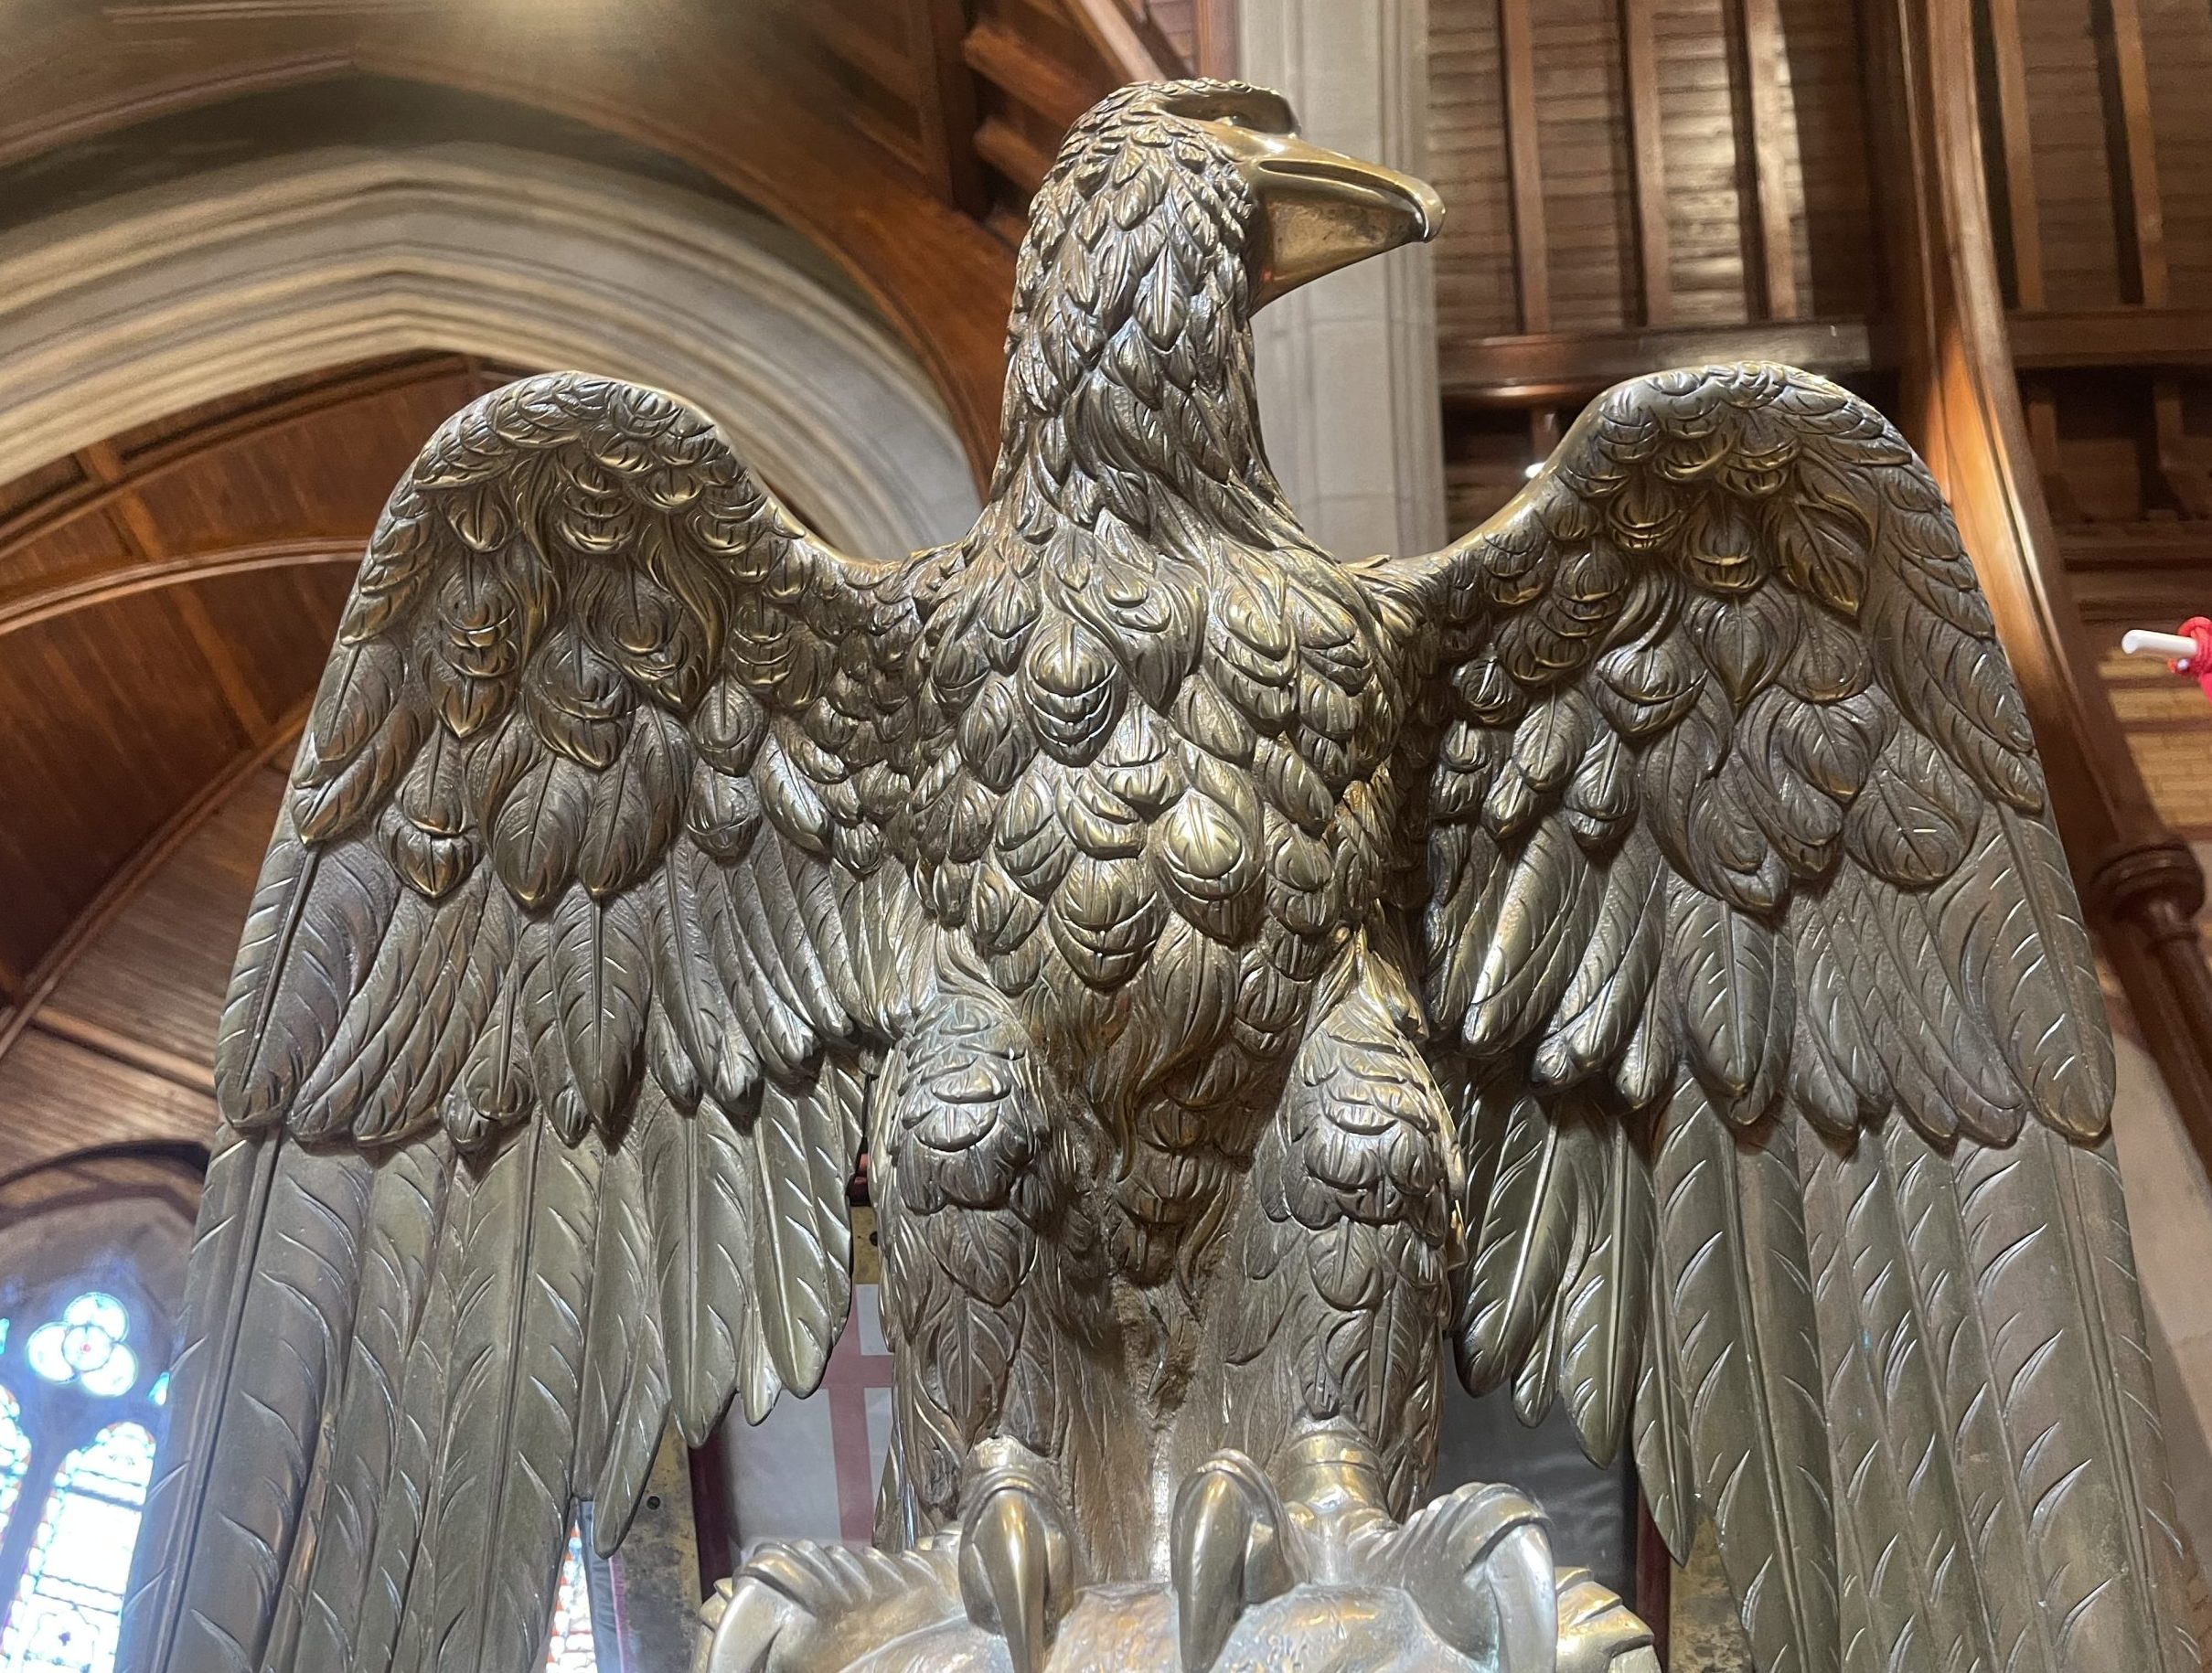 bronze eagle on lectern inside church